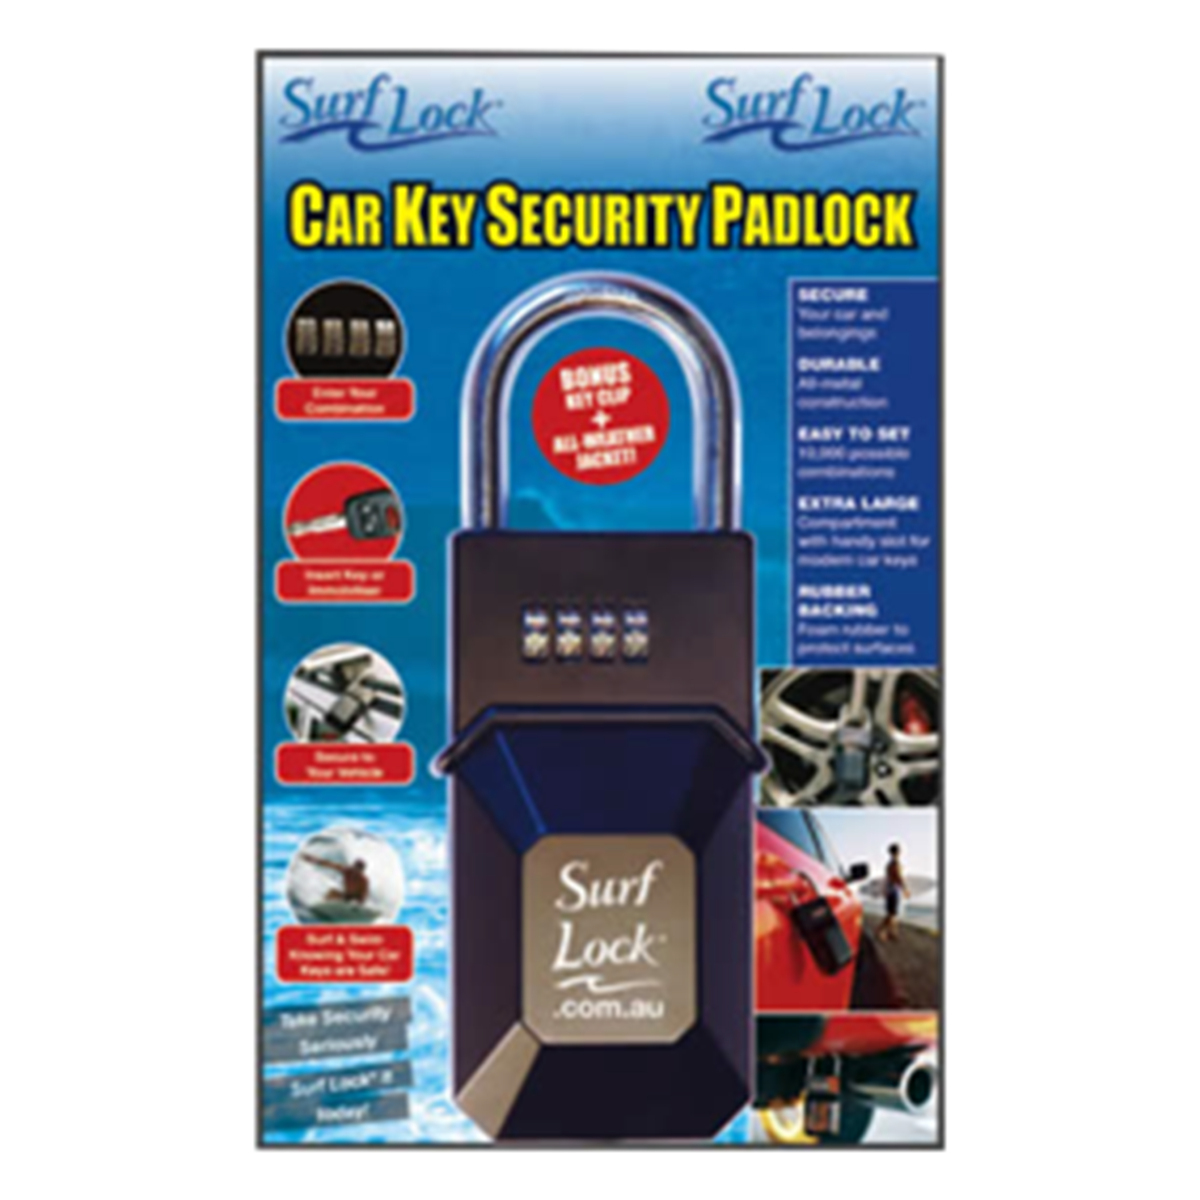 Surf Lock - Car Key Security Padlock